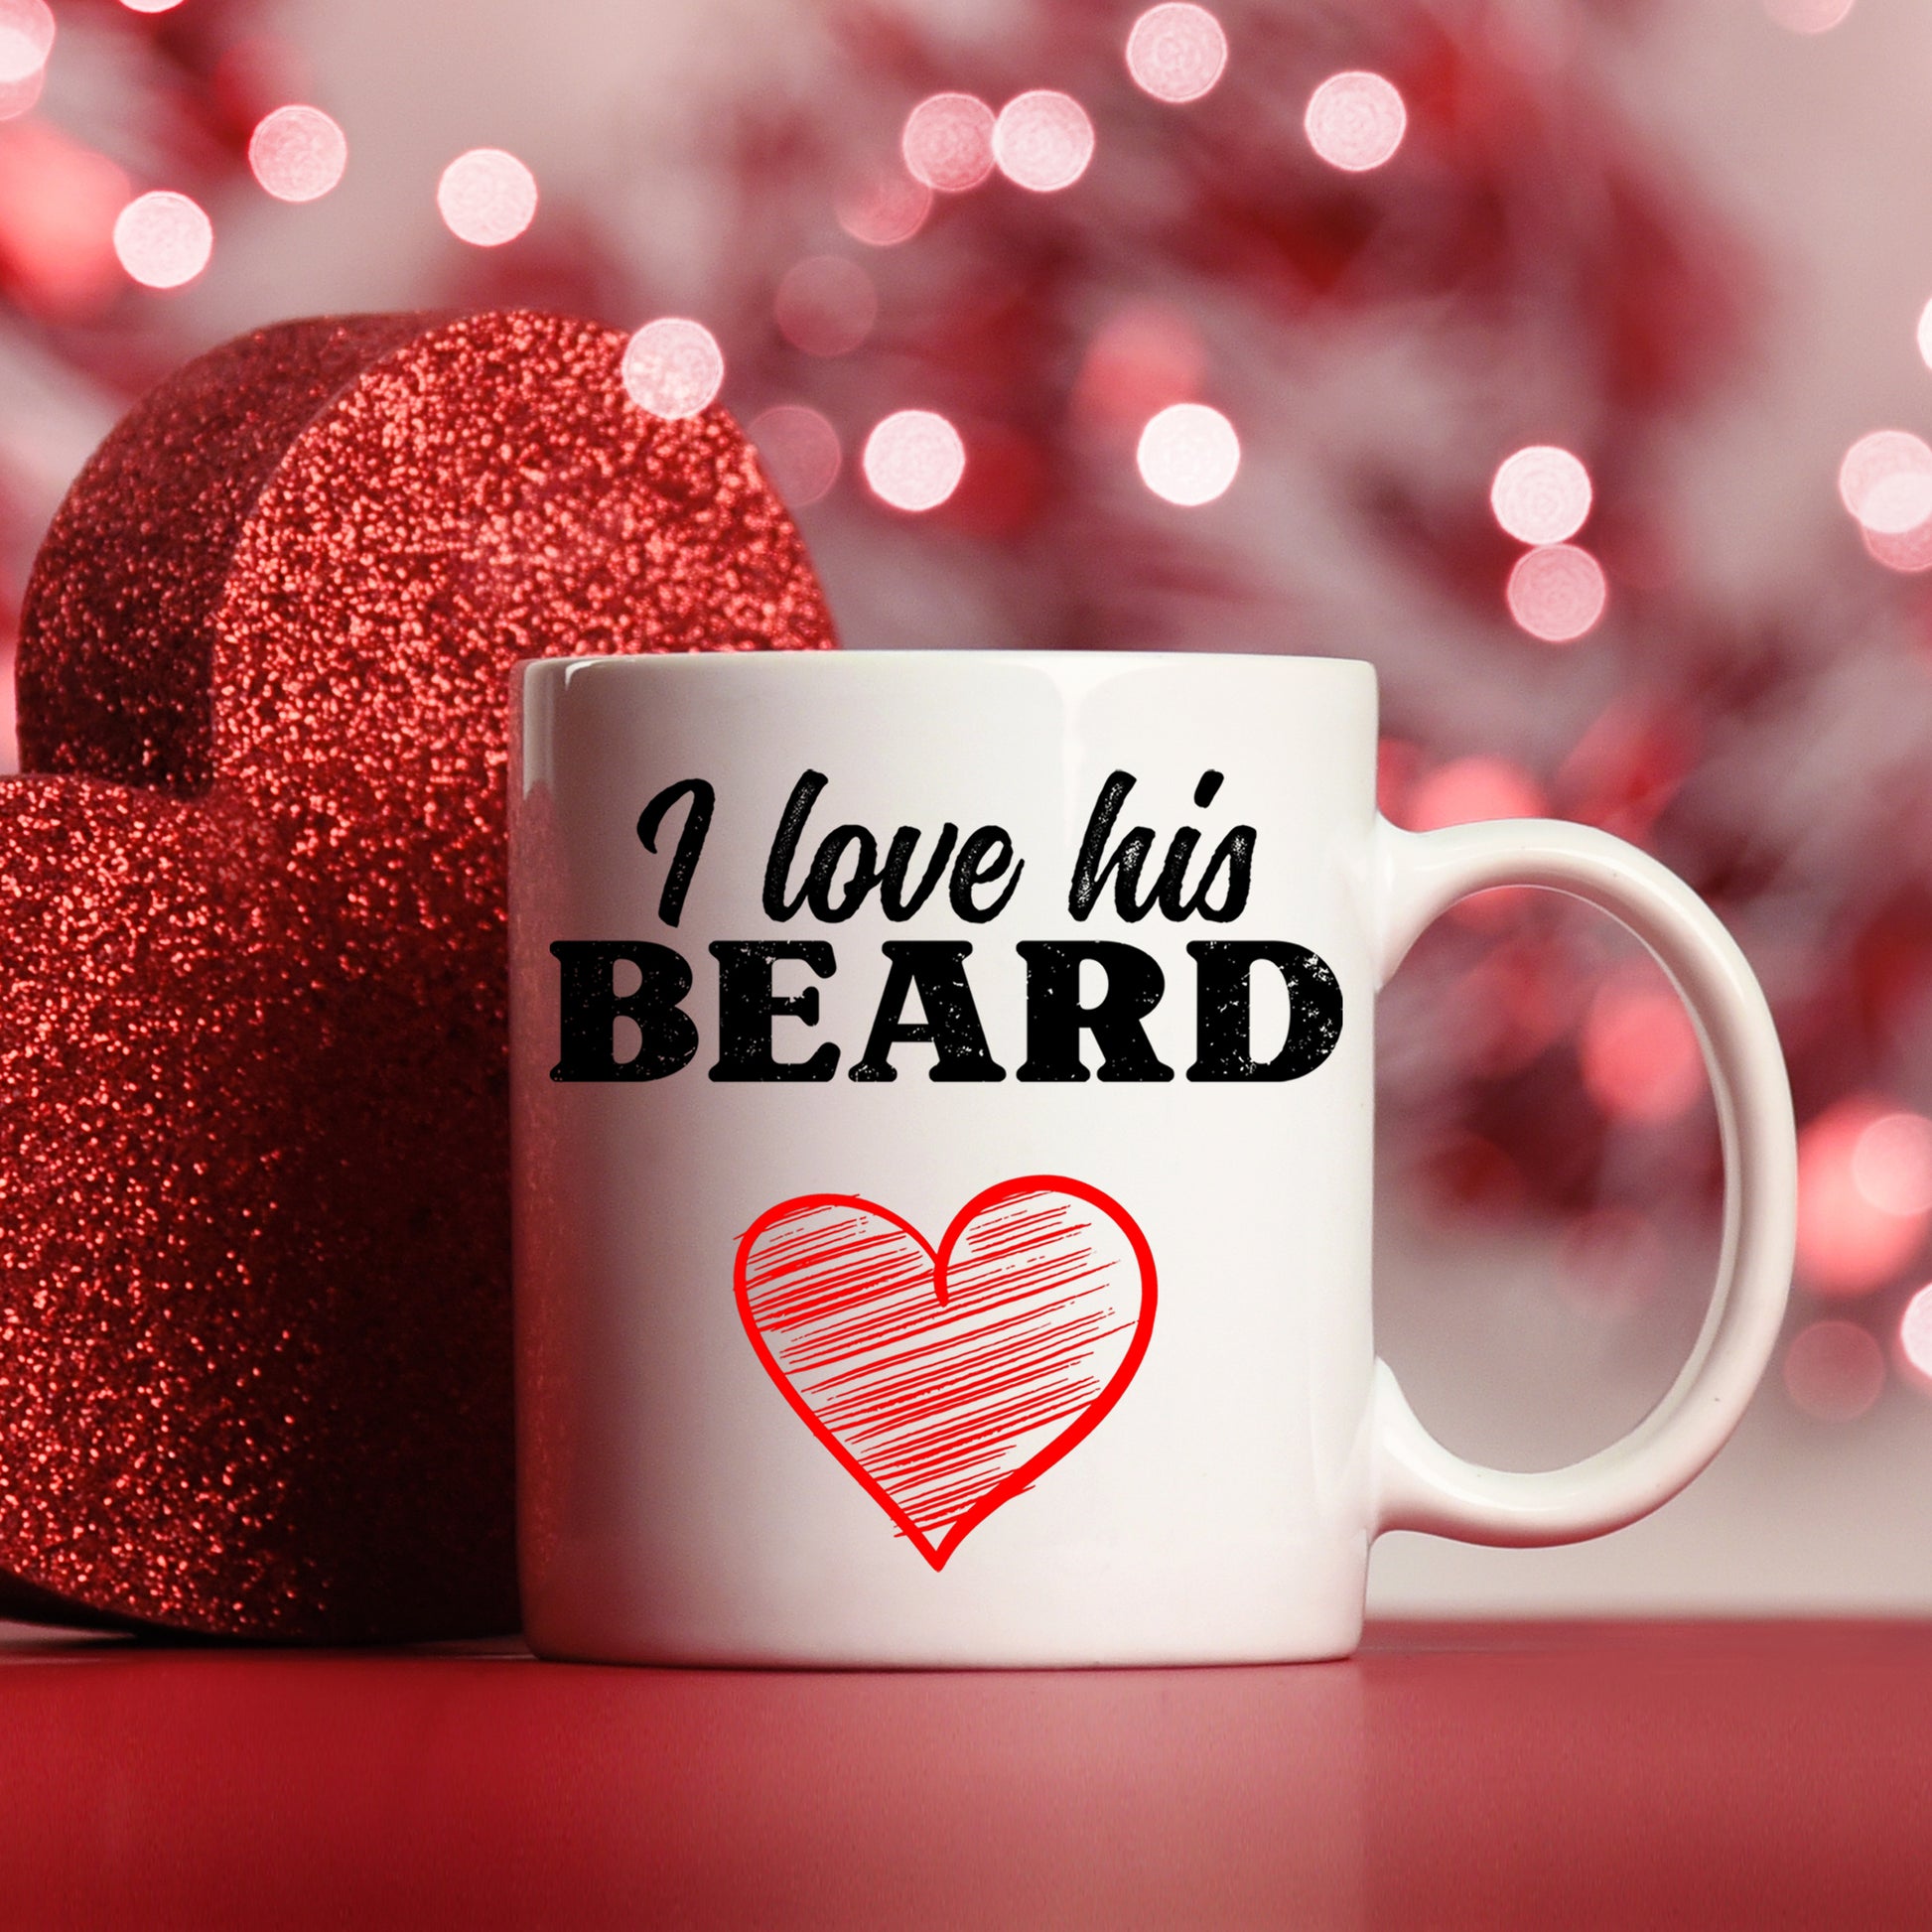 I Love His Beard / Her Butt Mug and/or Coaster Gift  - Always Looking Good - I Love His Beard Mug Only  